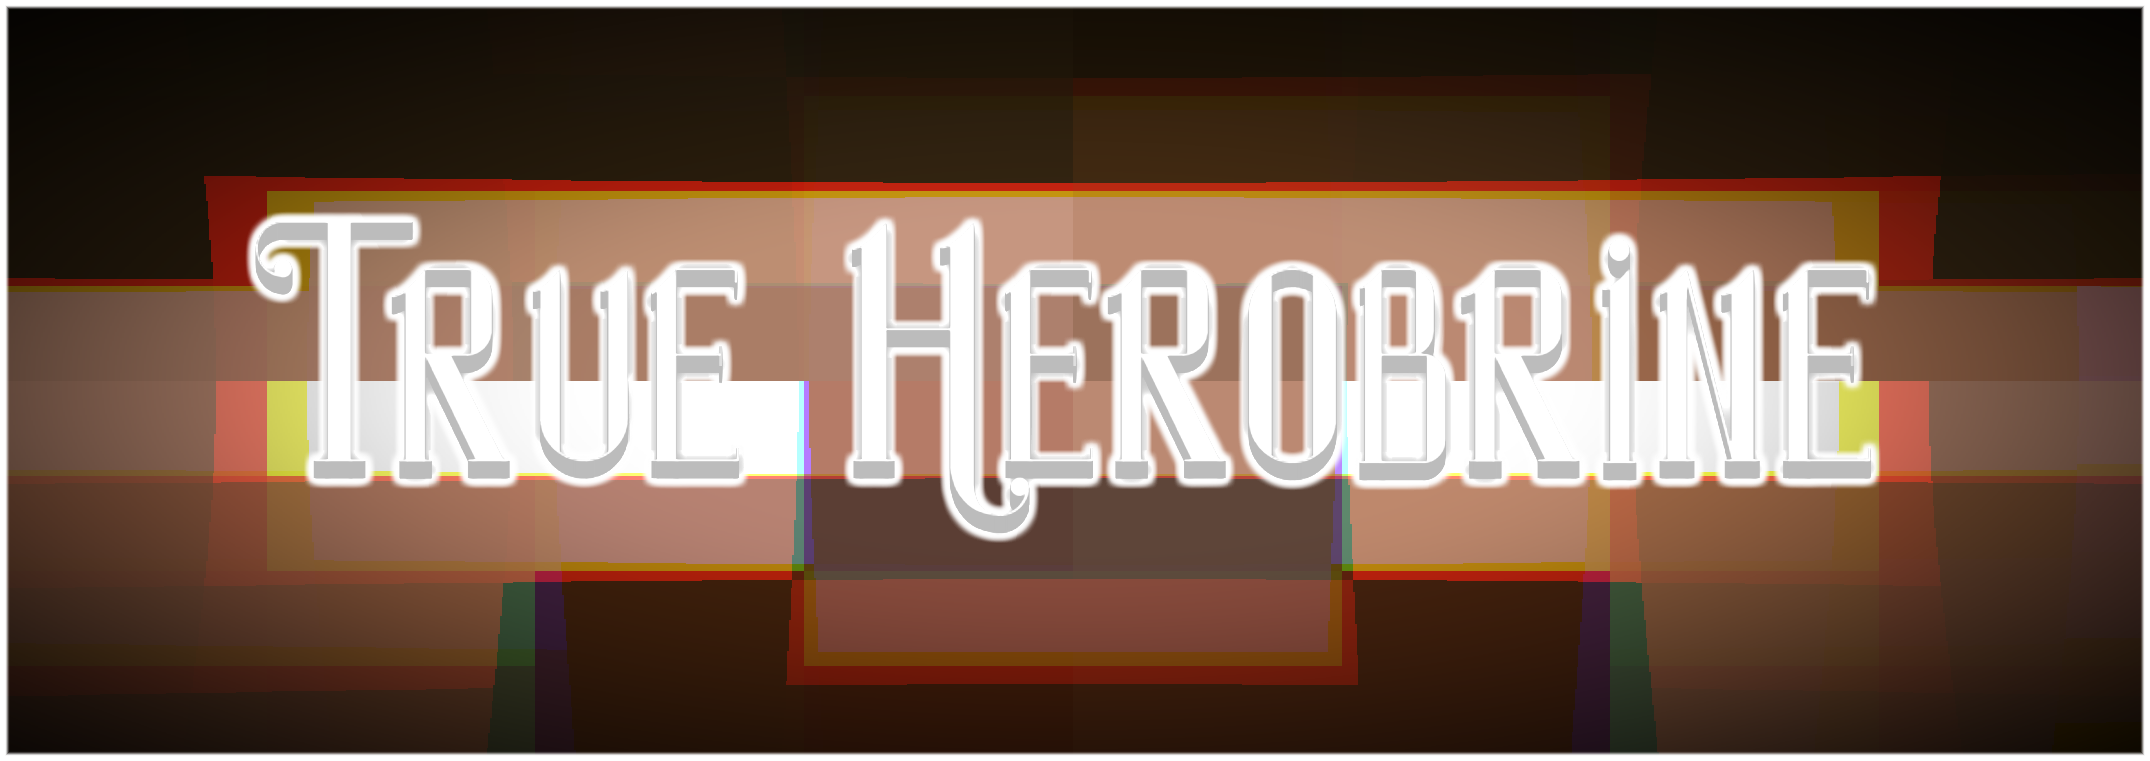 Herobrine survival - Minecraft Mods - CurseForge